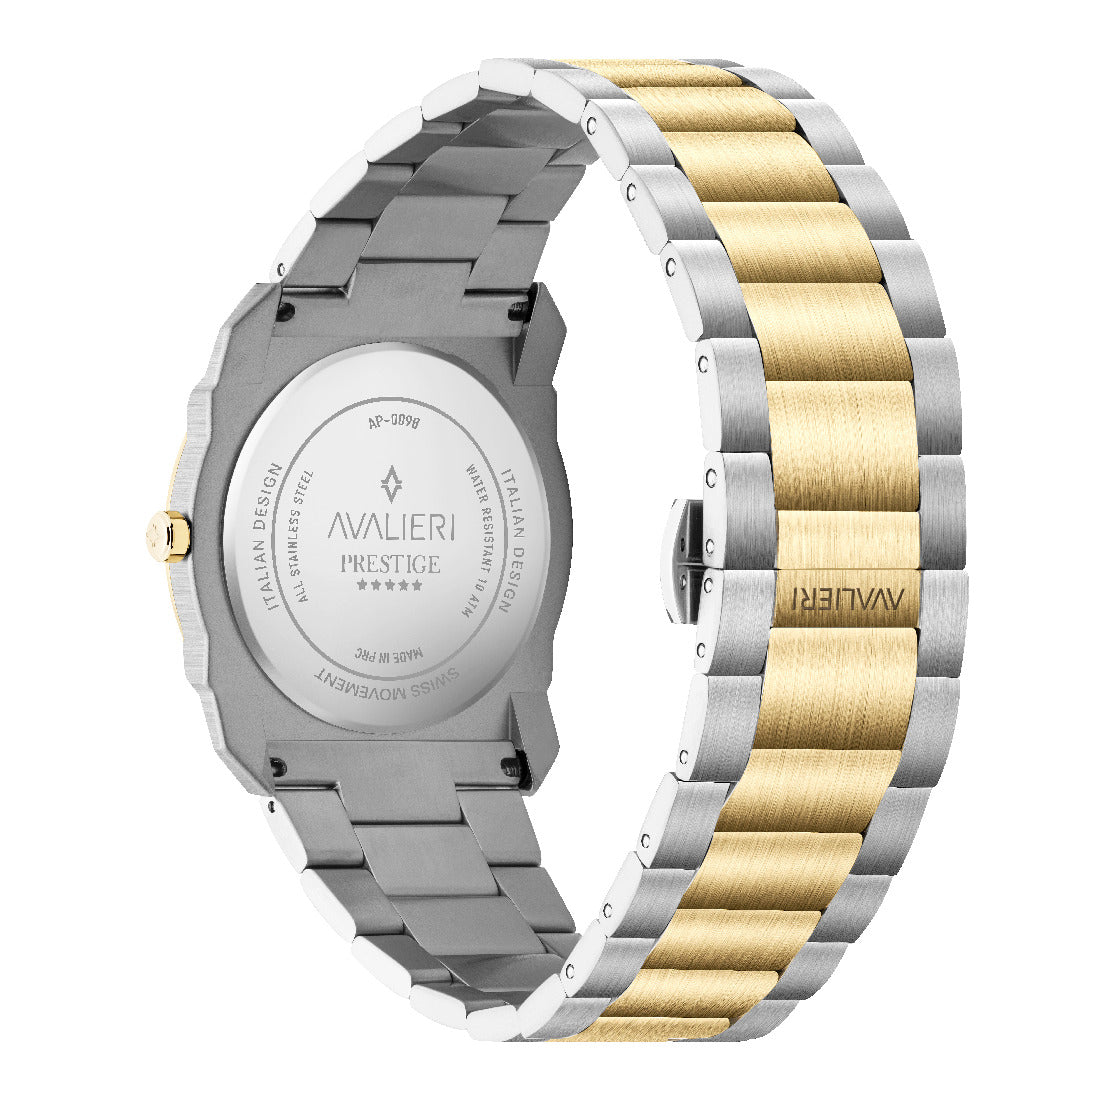 Avalieri Prestige Men's Watch, Swiss Quartz Movement, Green Dial - AP-0098